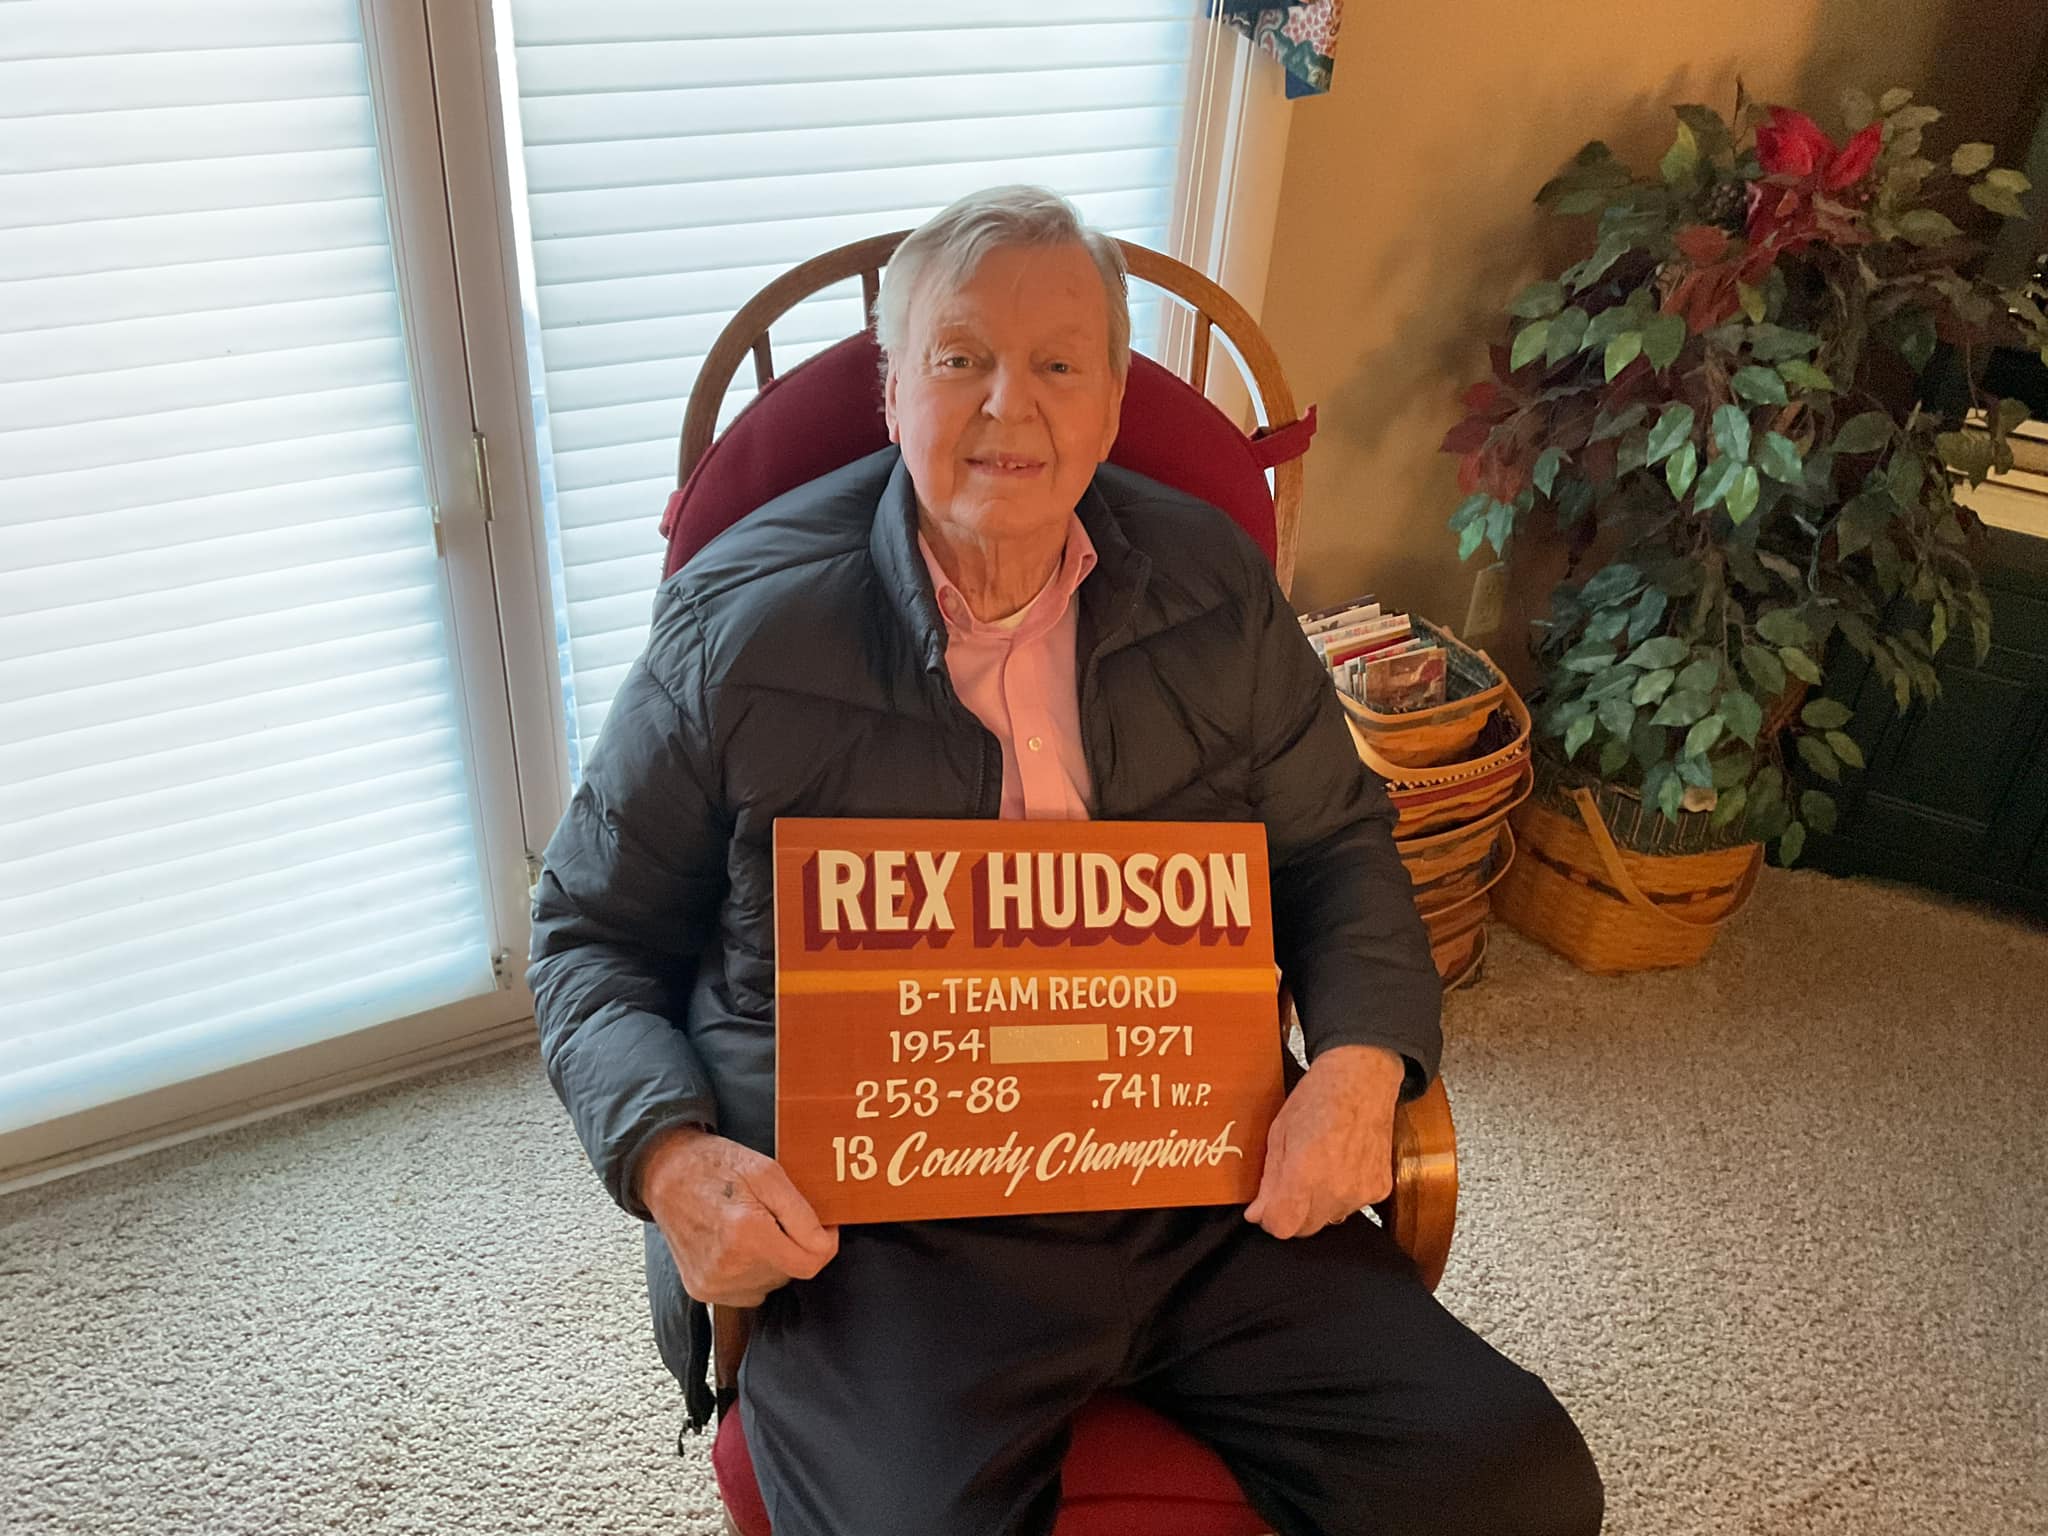 Social Media Post on Rex Hudson